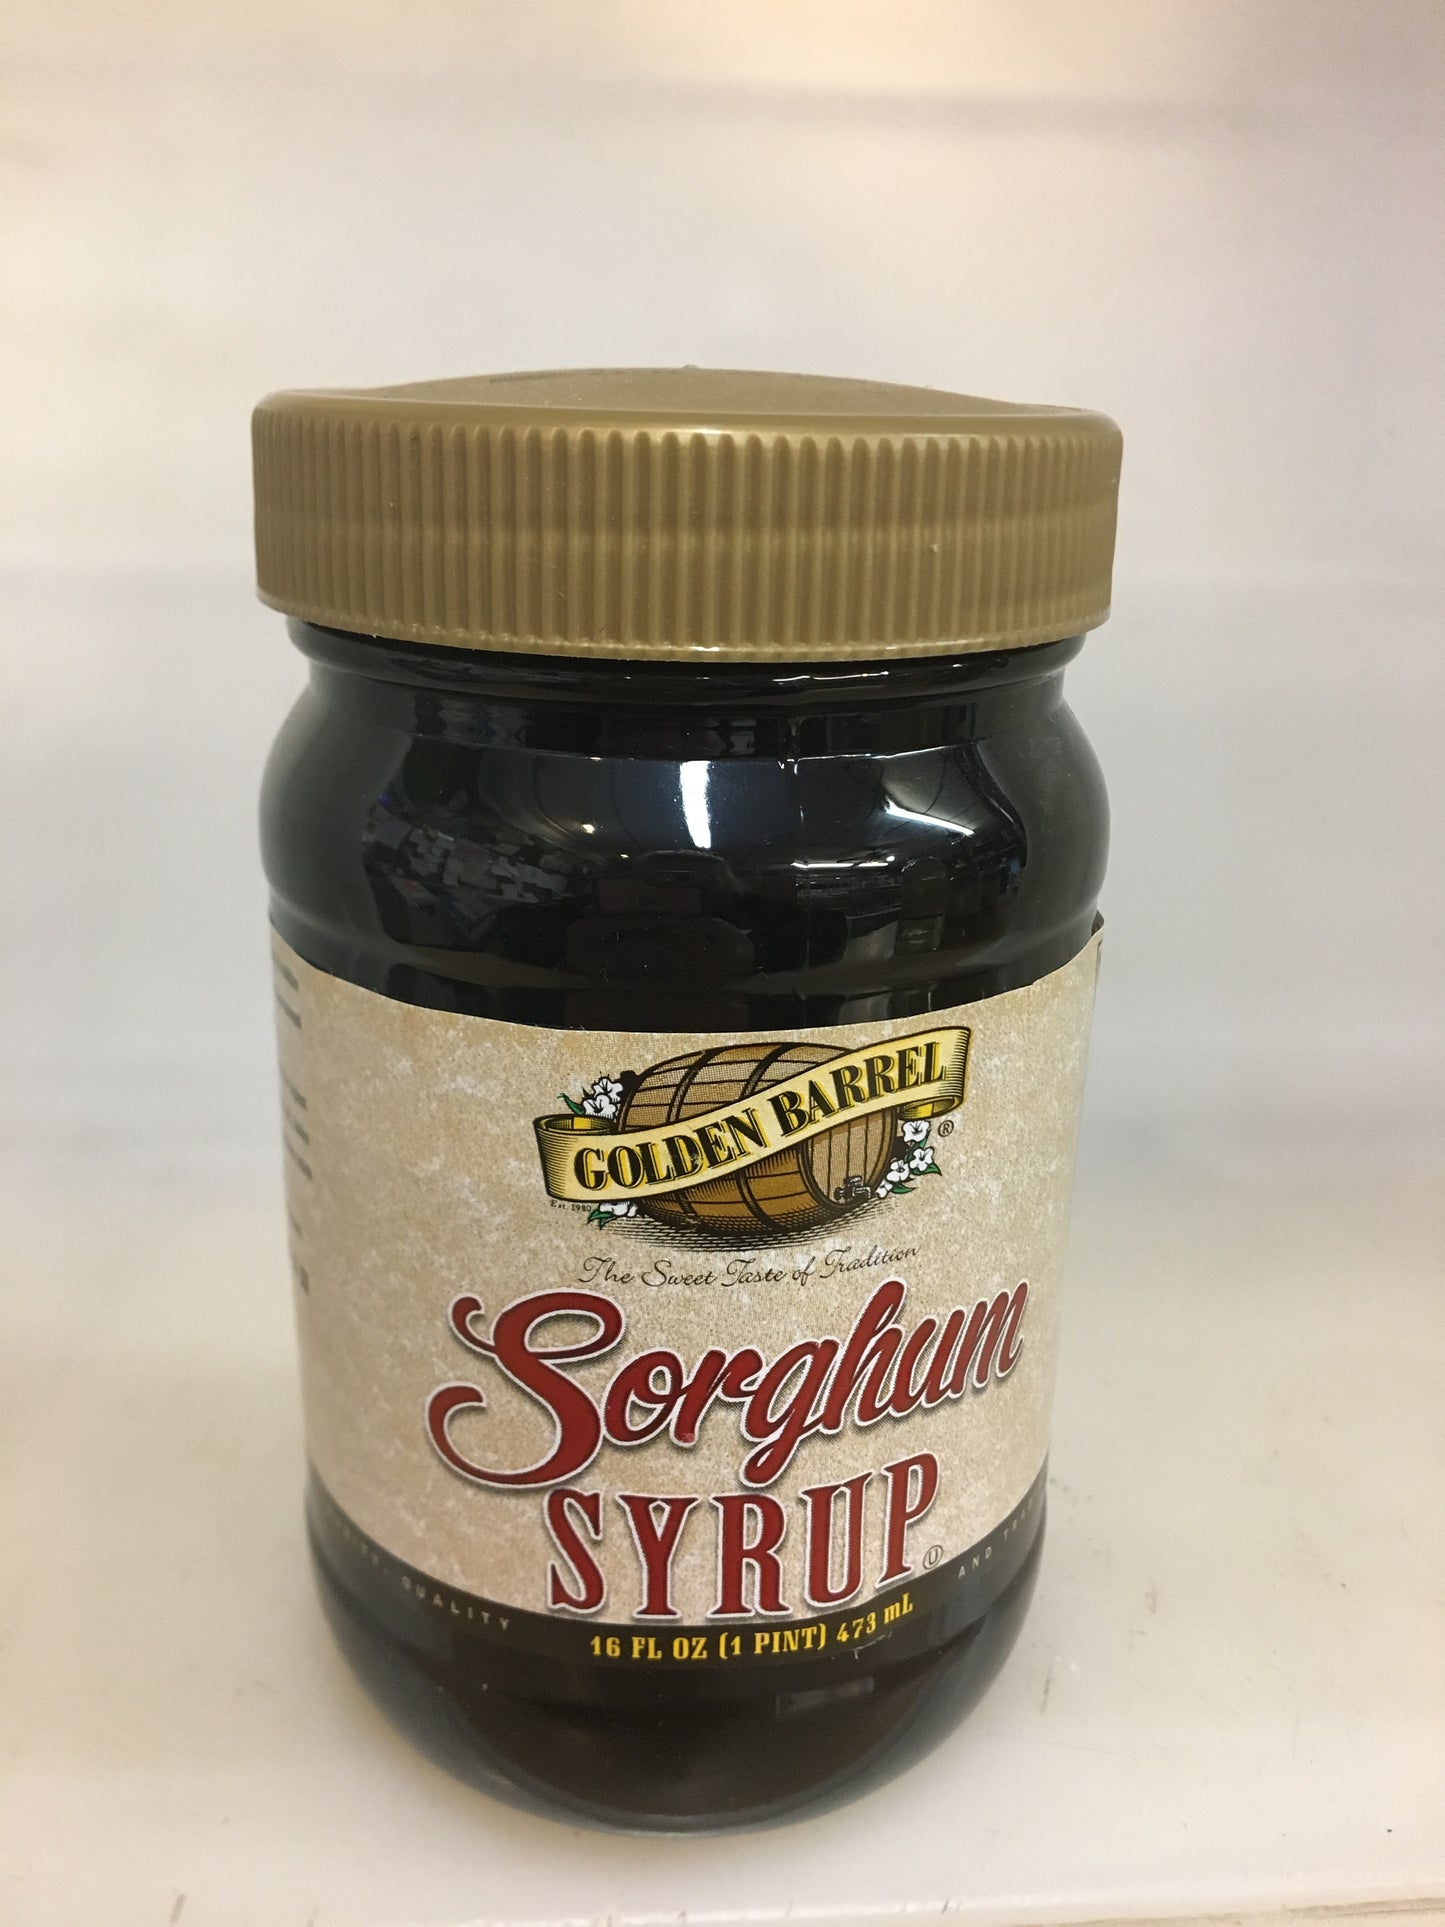 Golden Barrel Sorghum Syrup